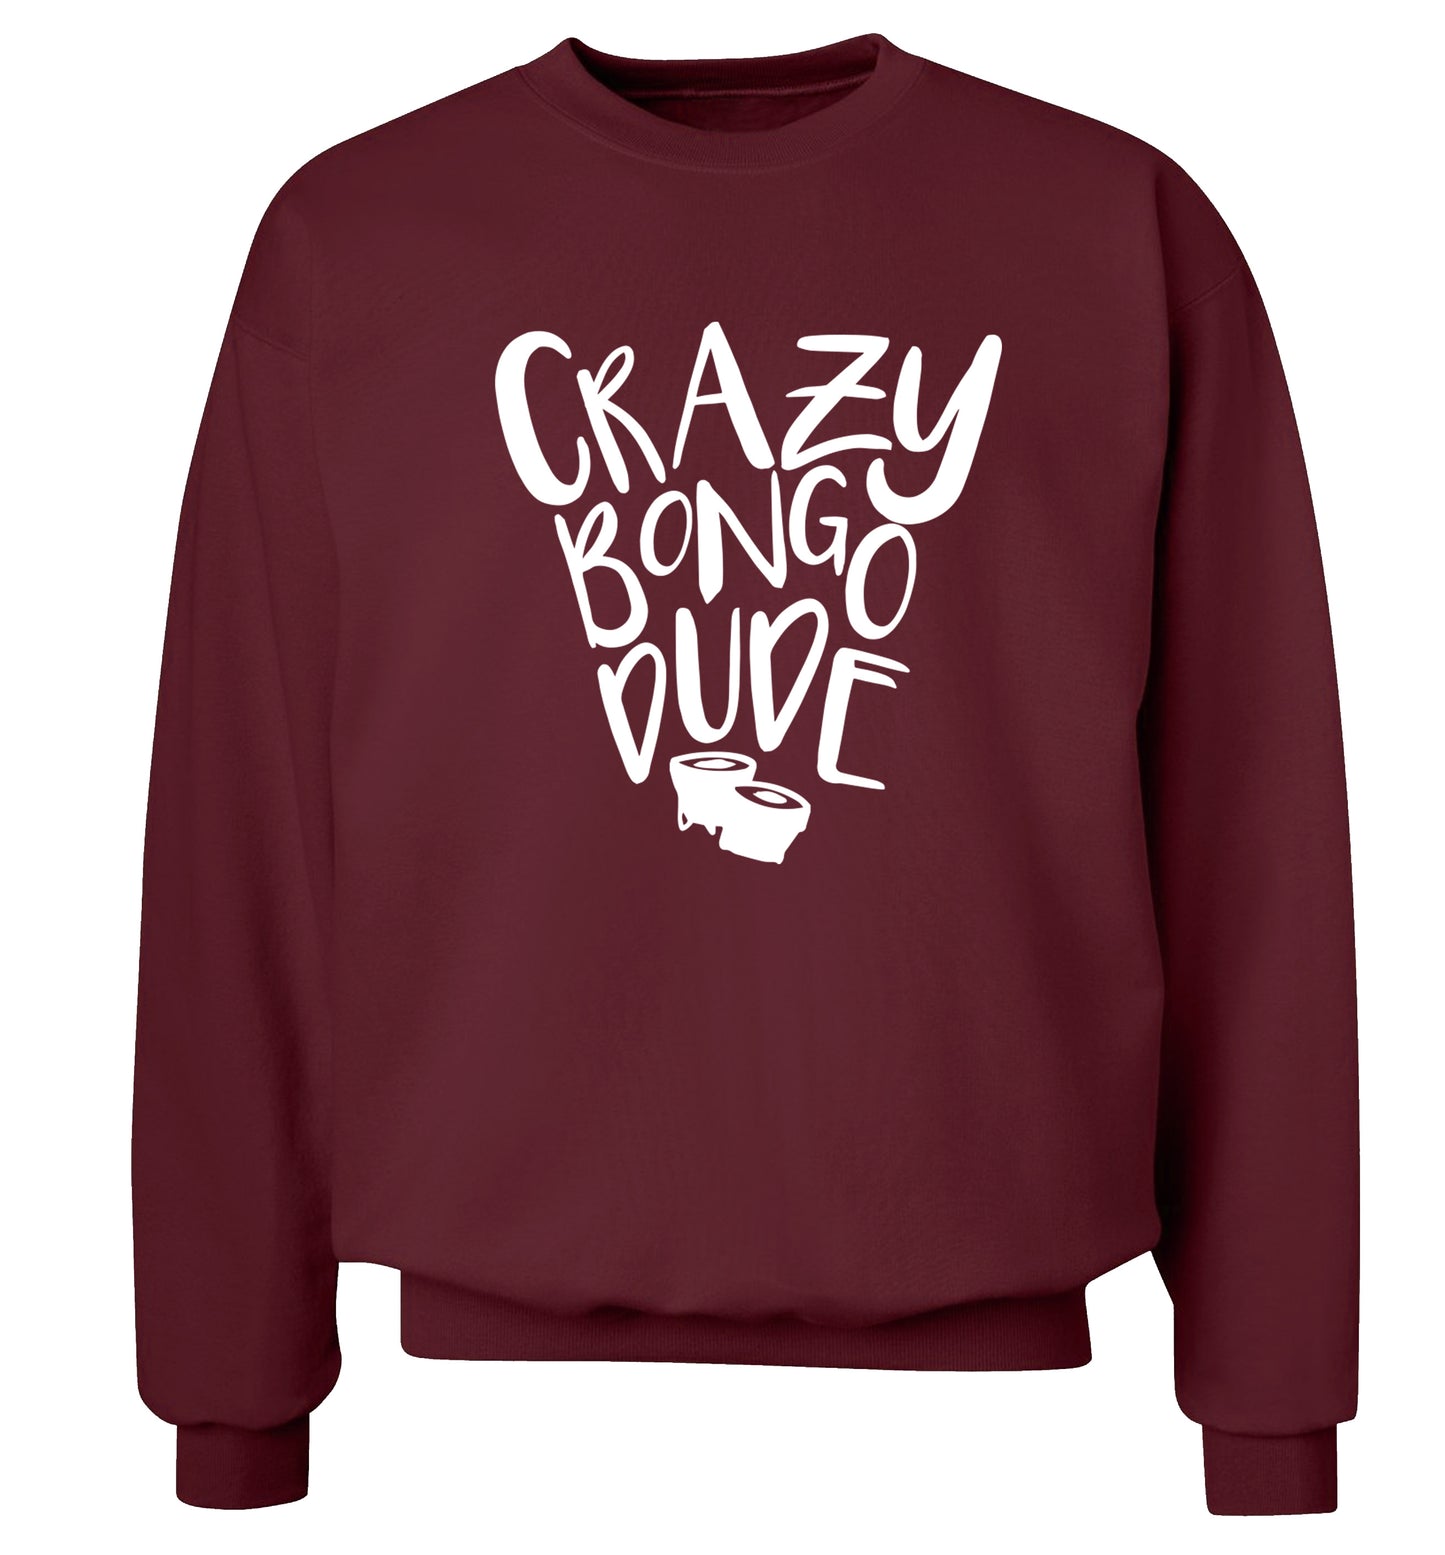 Crazy bongo dude Adult's unisex maroon Sweater 2XL